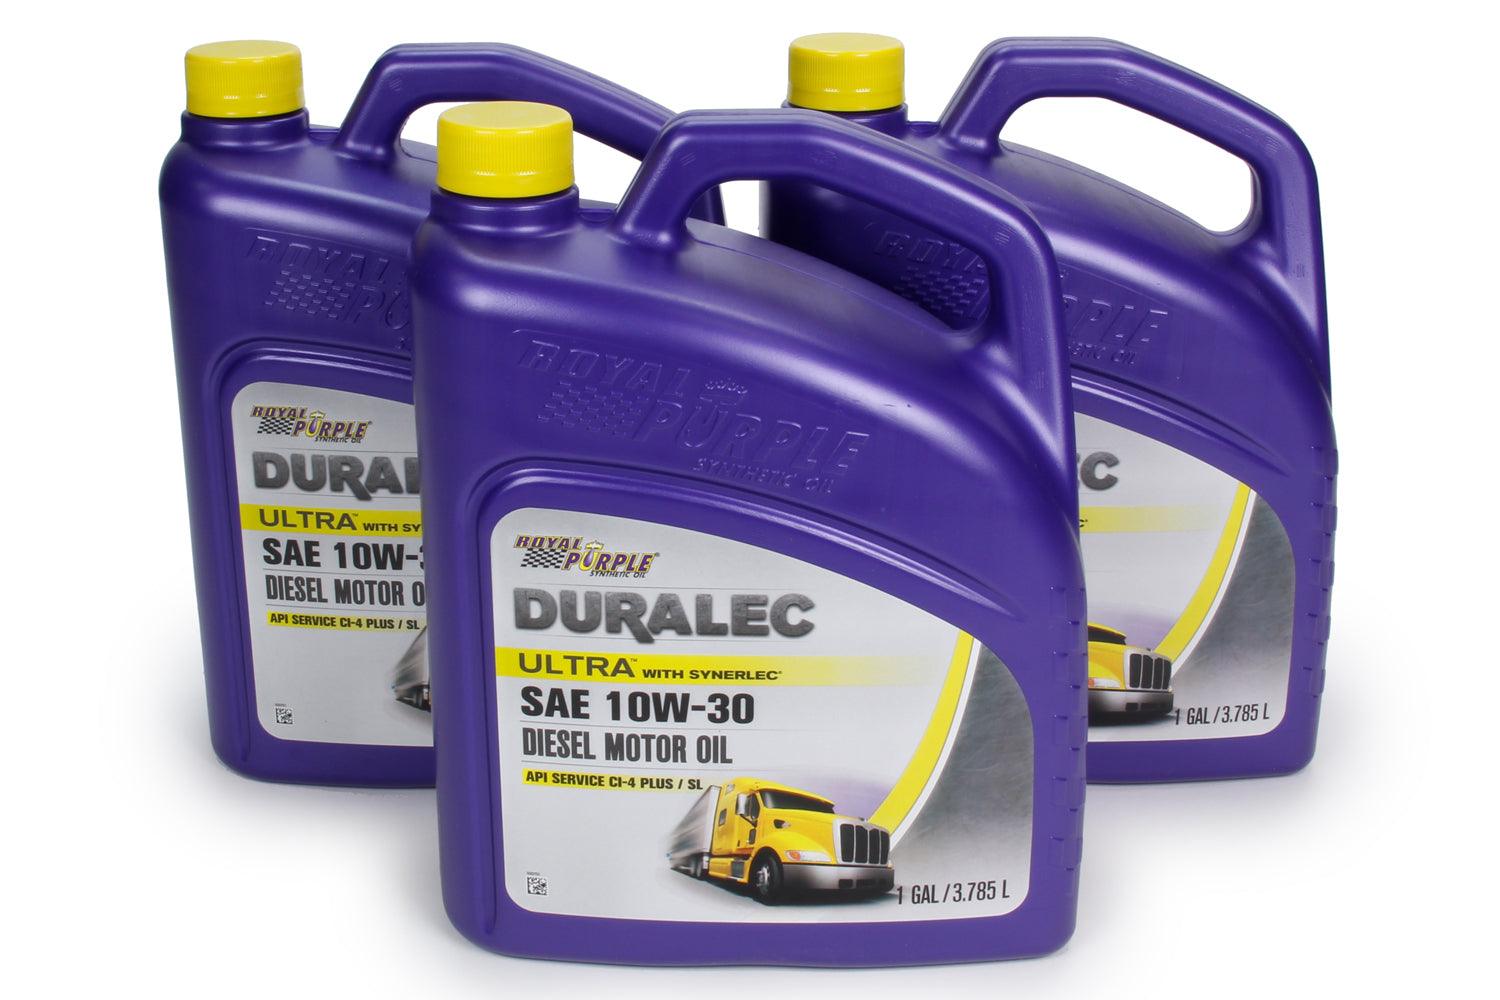 Duralec Ultra 10W30 Oil Case 3 x 1 Gallon - Burlile Performance Products